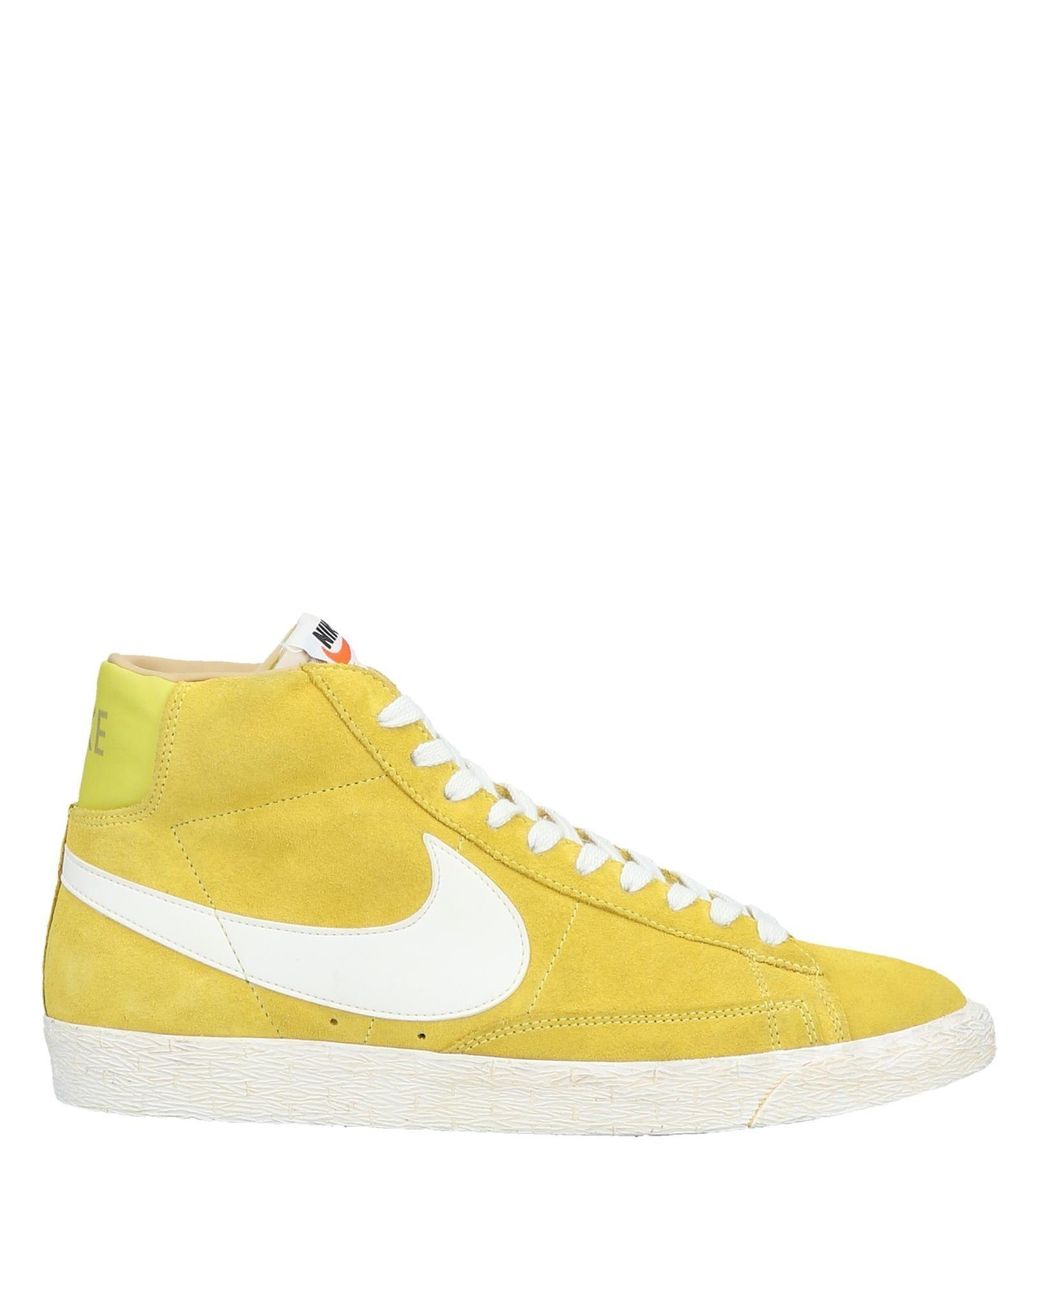 Nike High-tops & Sneakers in Yellow for Men | Lyst Australia